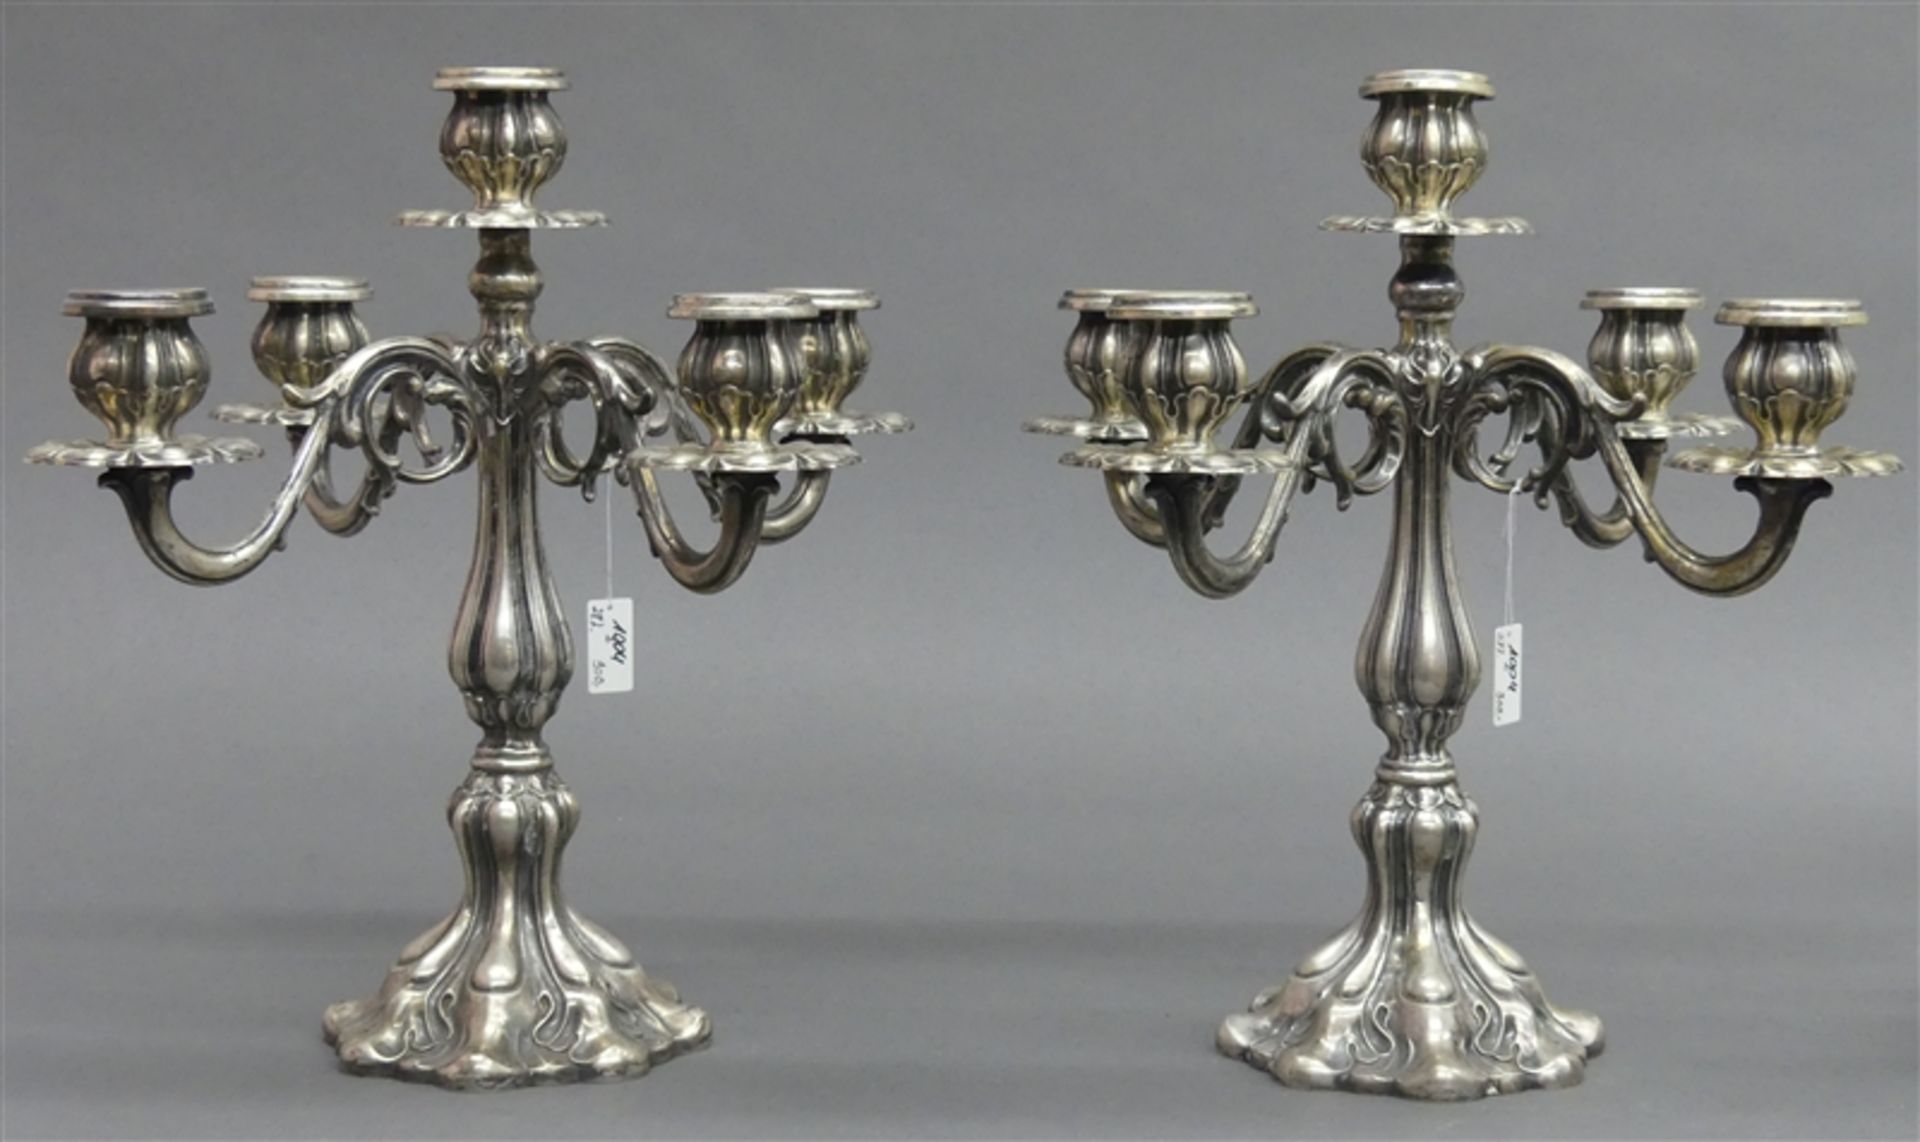 Paar Prunkleuchter800er Silber, punziert, barocke Form, je 5flammig, Reliefdekor, zusammen ca 1640g,